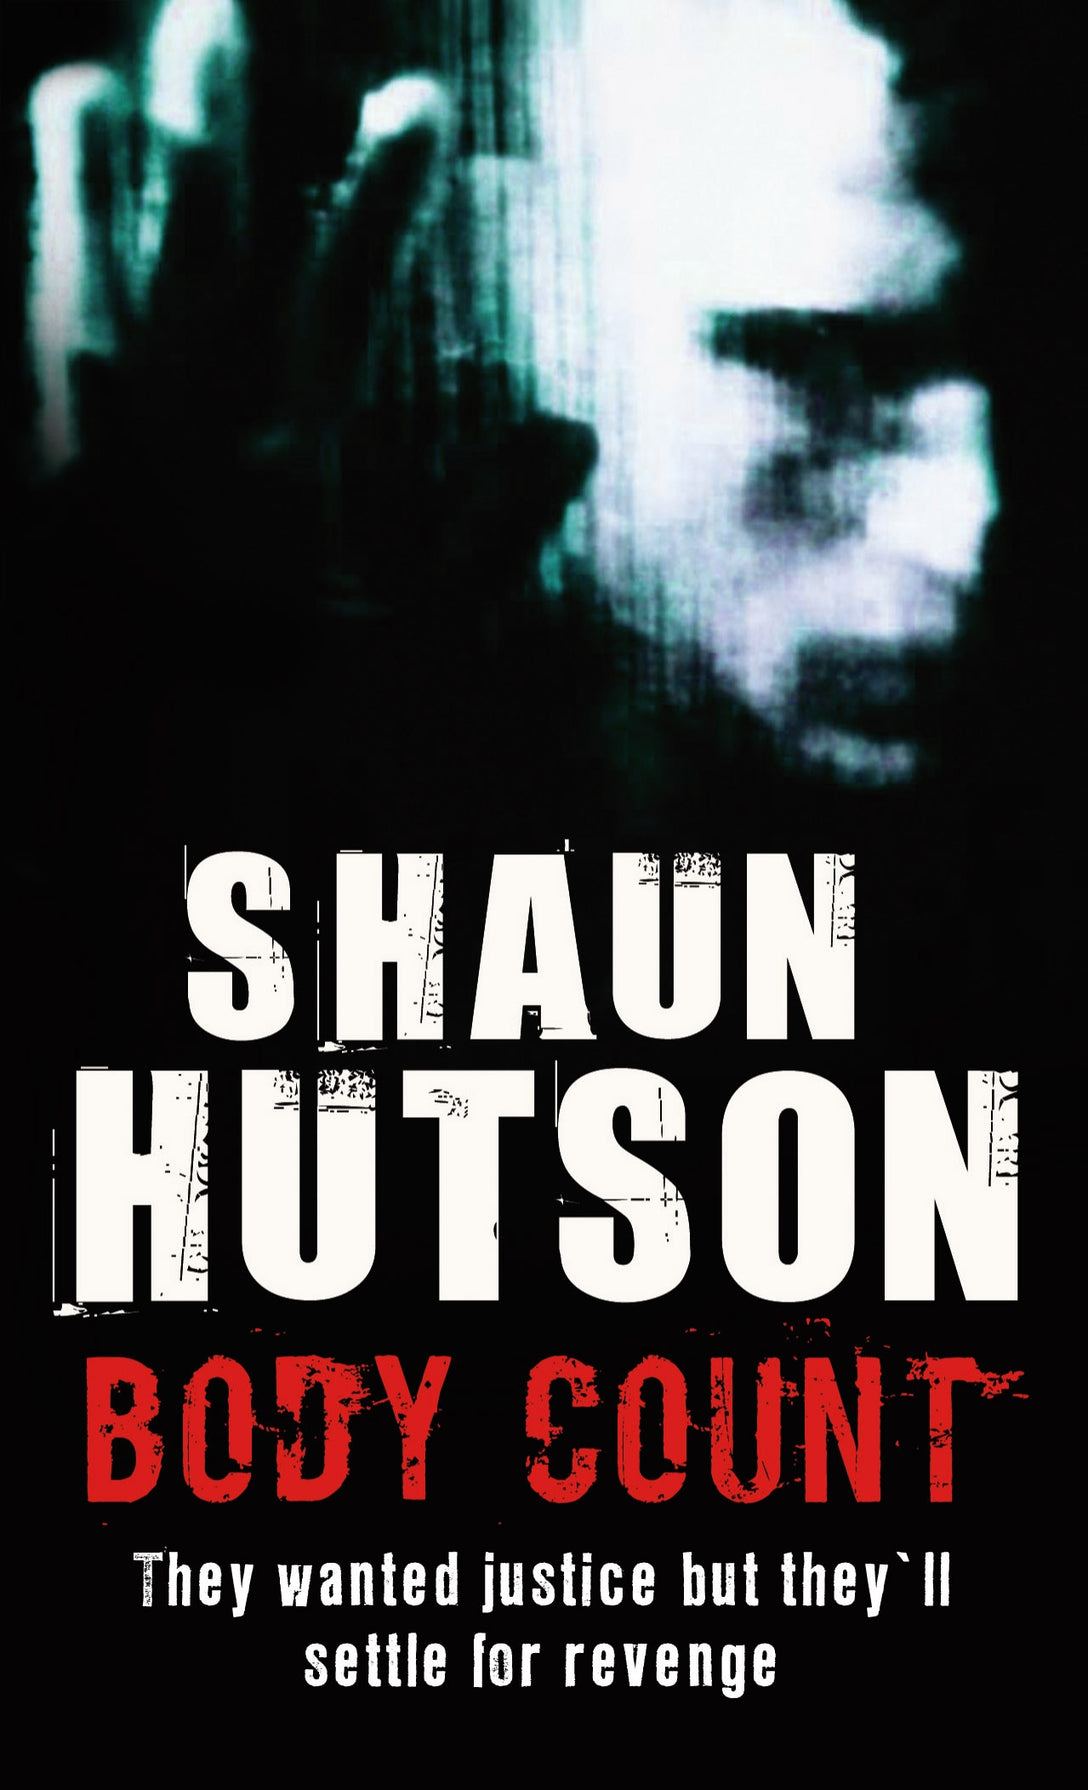 Body Count by Shaun Hutson